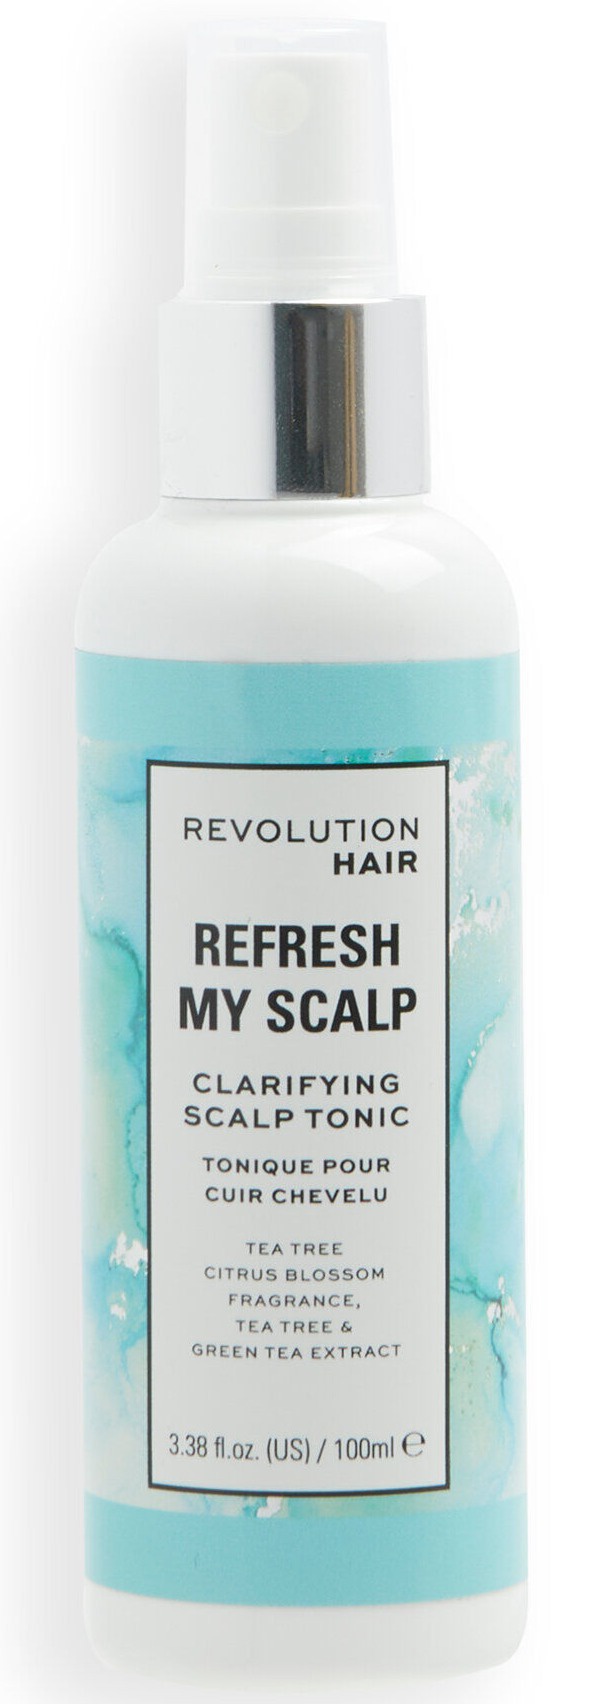 Revolution Hair Refresh My Scalp Clarifying Tonic